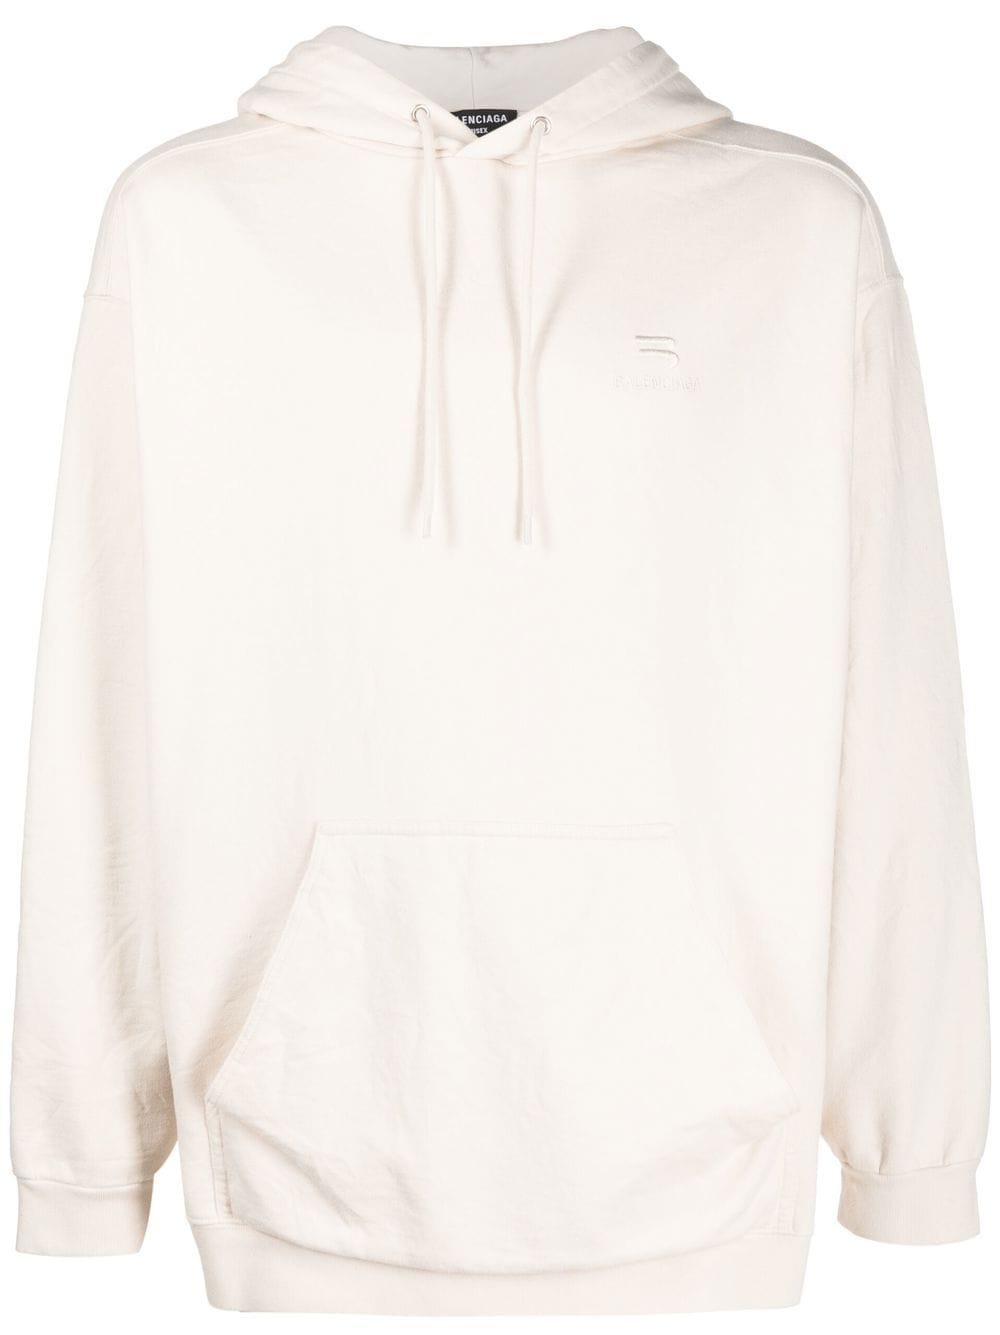 Balenciaga drawstring pullover hoodie - Neutrals